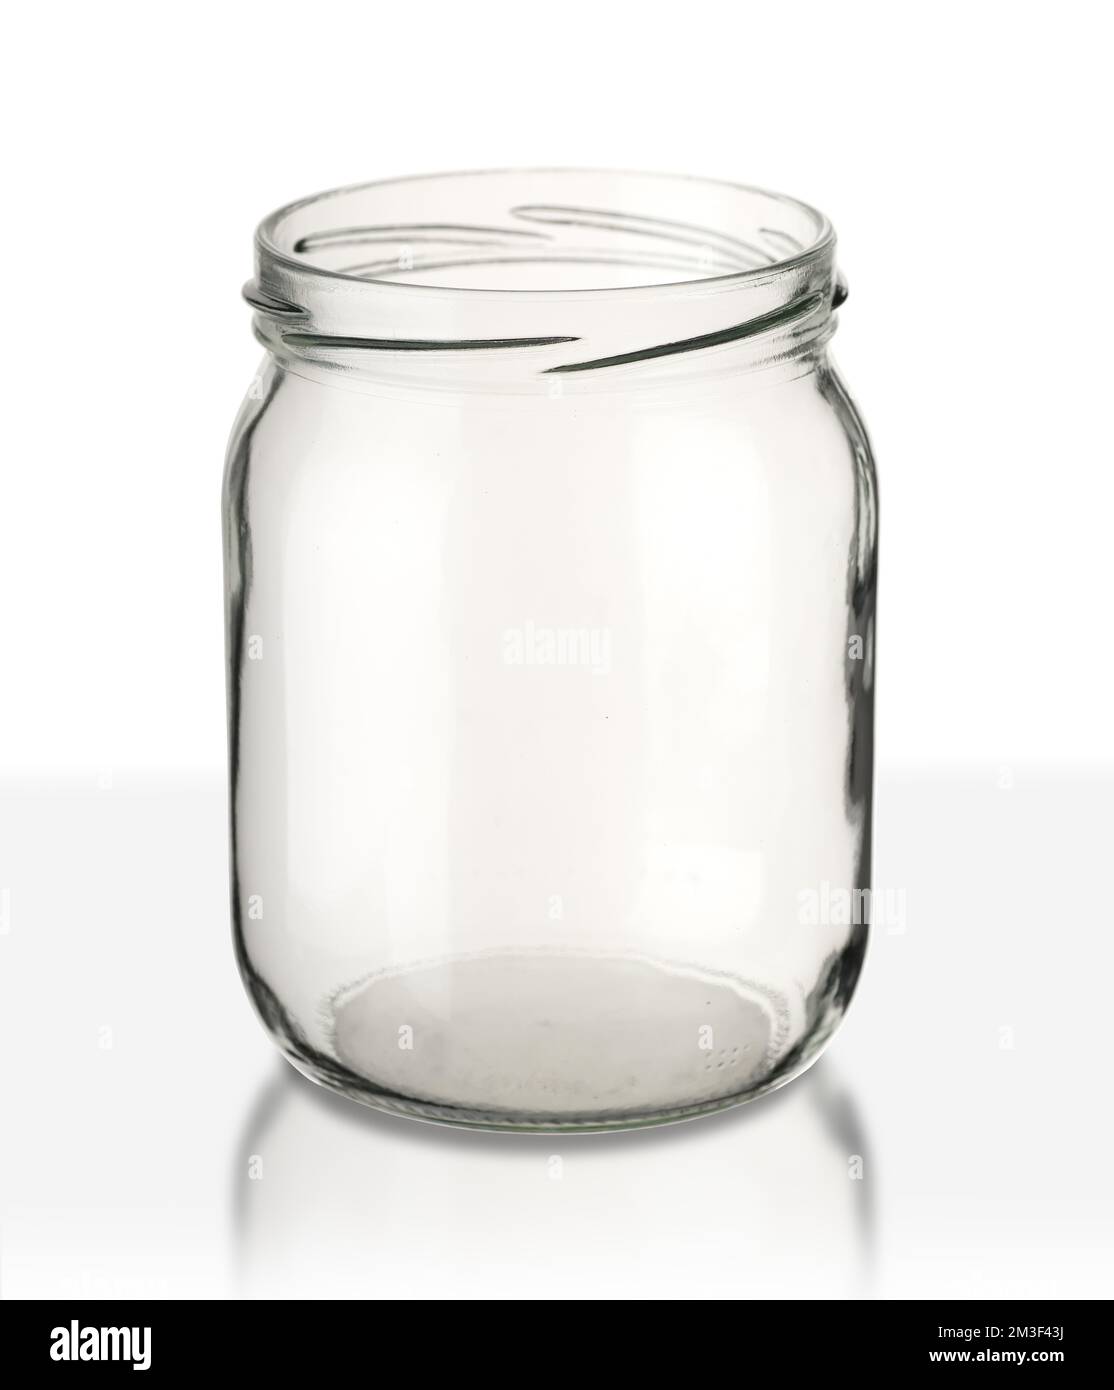 empty glass jar on white background Stock Photo